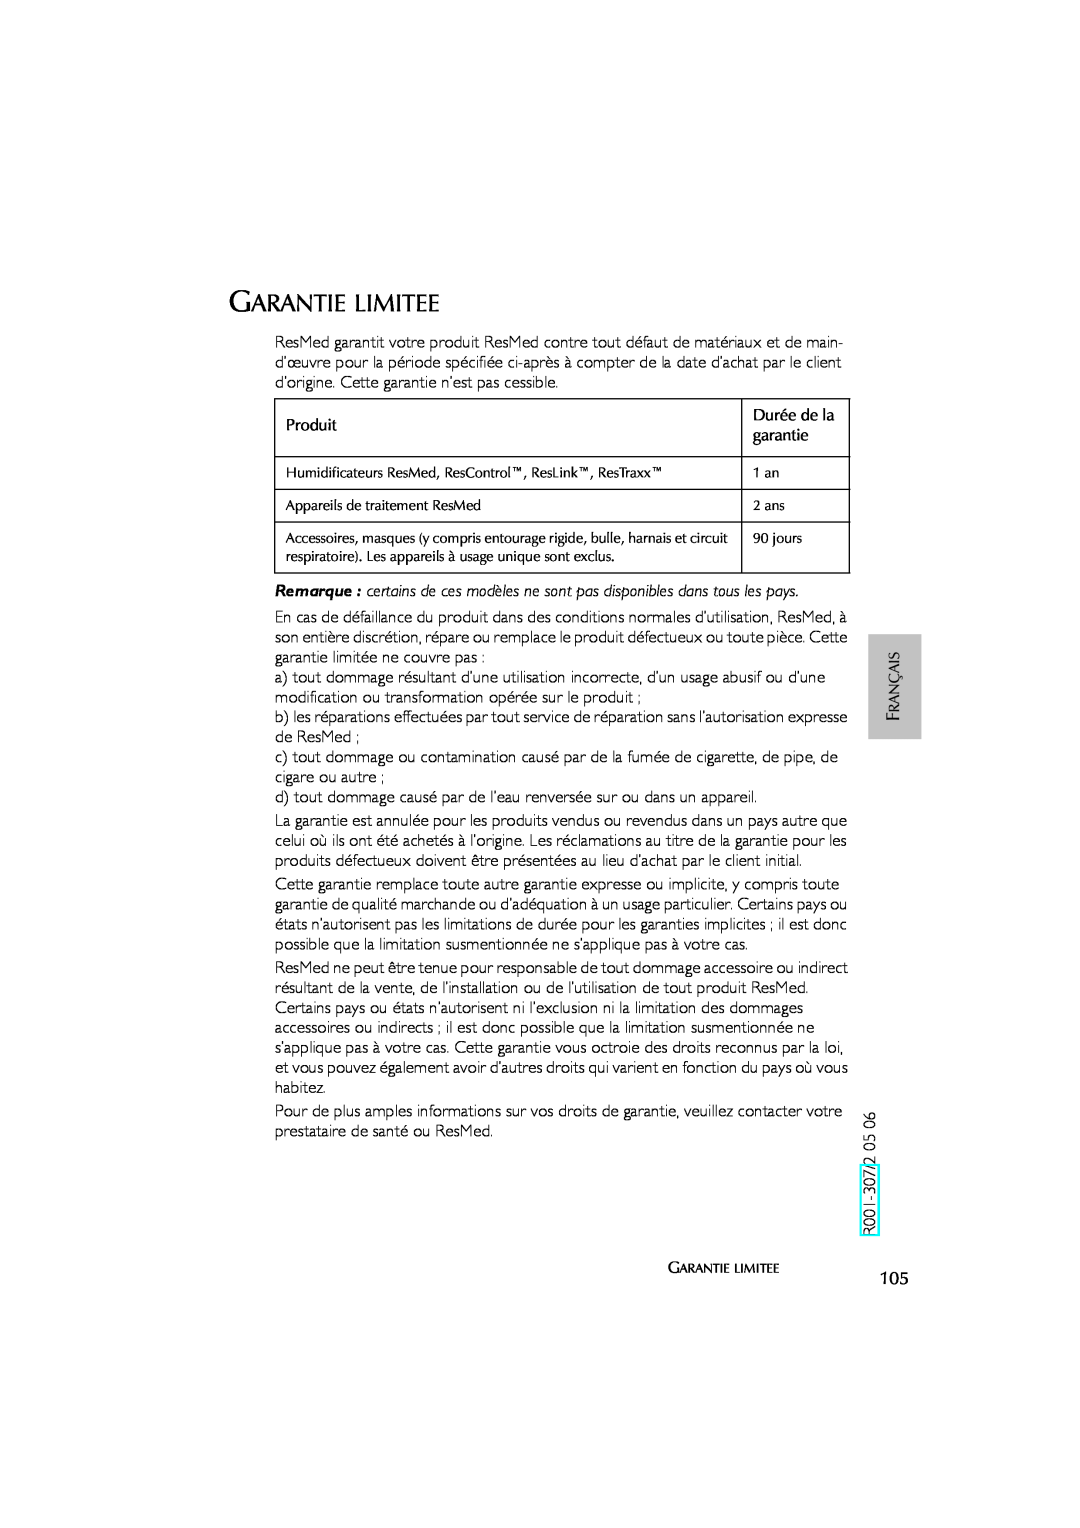 ResMed AutoSet CS 2 user manual Garantie Limitee, Produit, Durée de la, garantie 